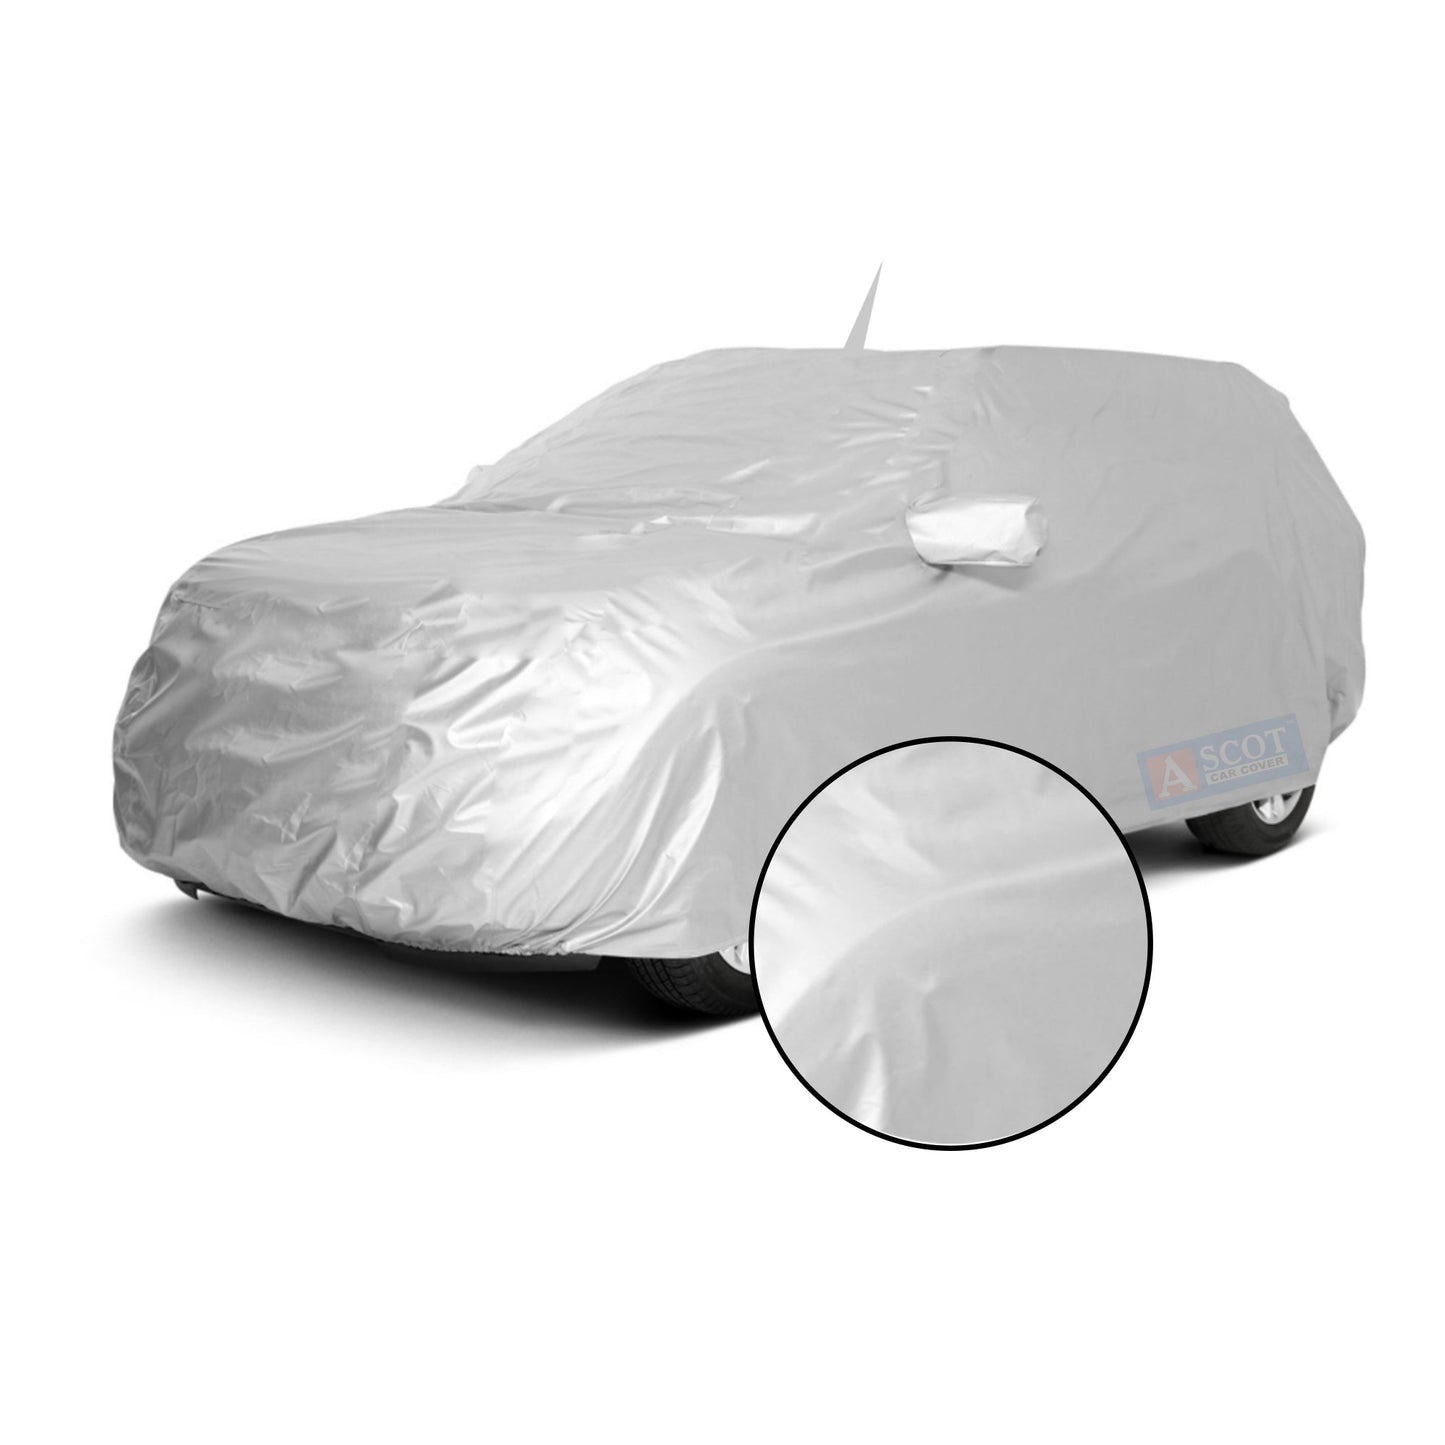 Ascot Mercedes-Benz EQC 2019-2023 Model Car Body Cover Dust Proof, Trippel Stitched